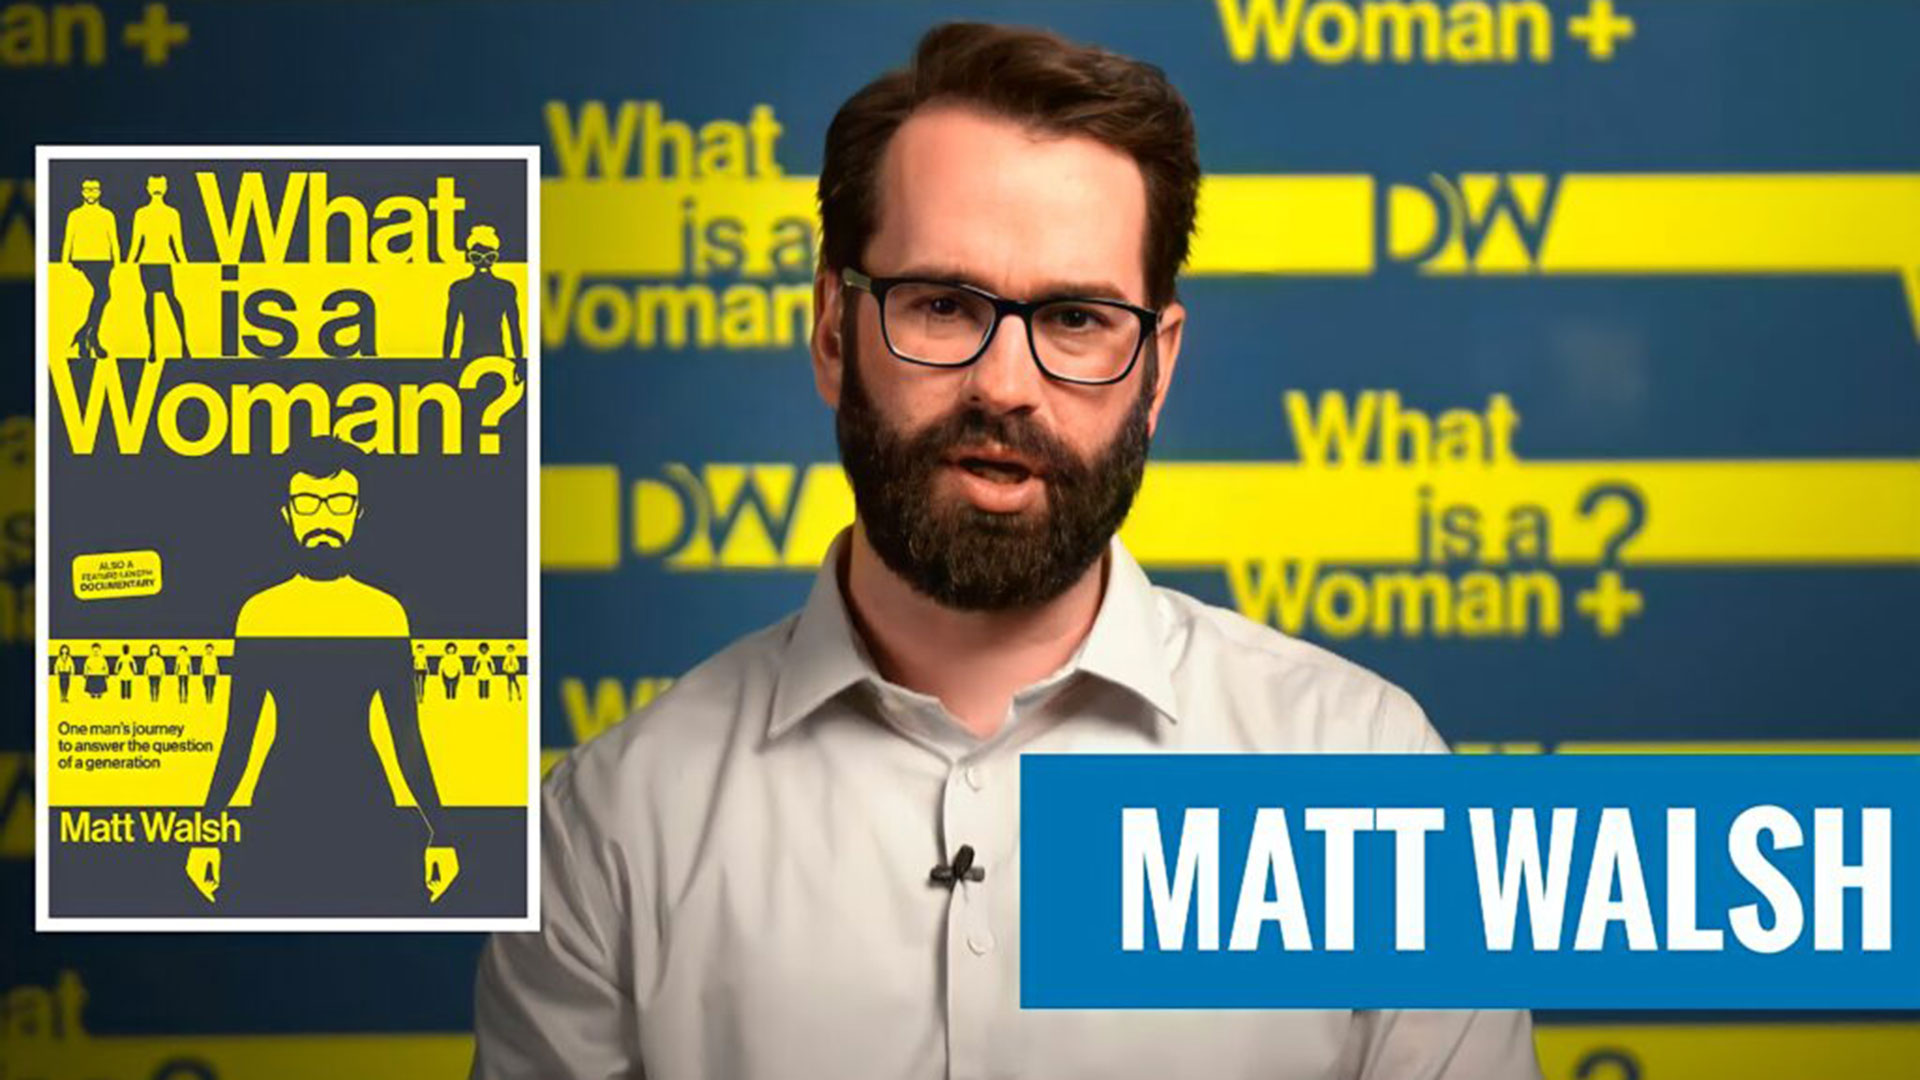 Matt Walsh, protagonista del documental "What is a woman?"